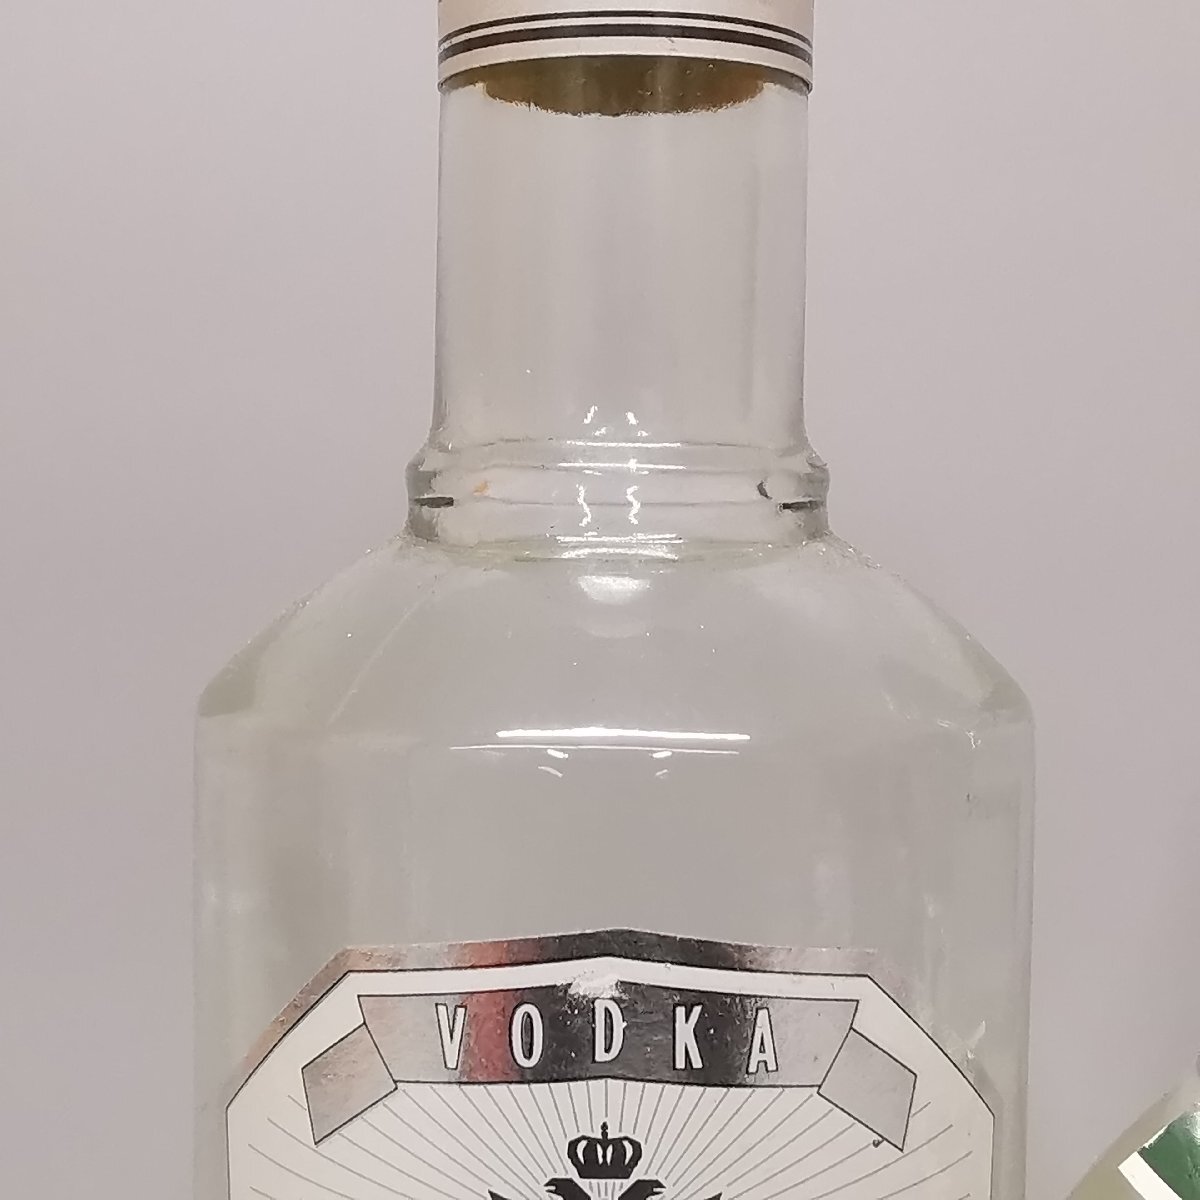 3 point summarize old sake spilitas Poland vodka IGANOFF Z5340